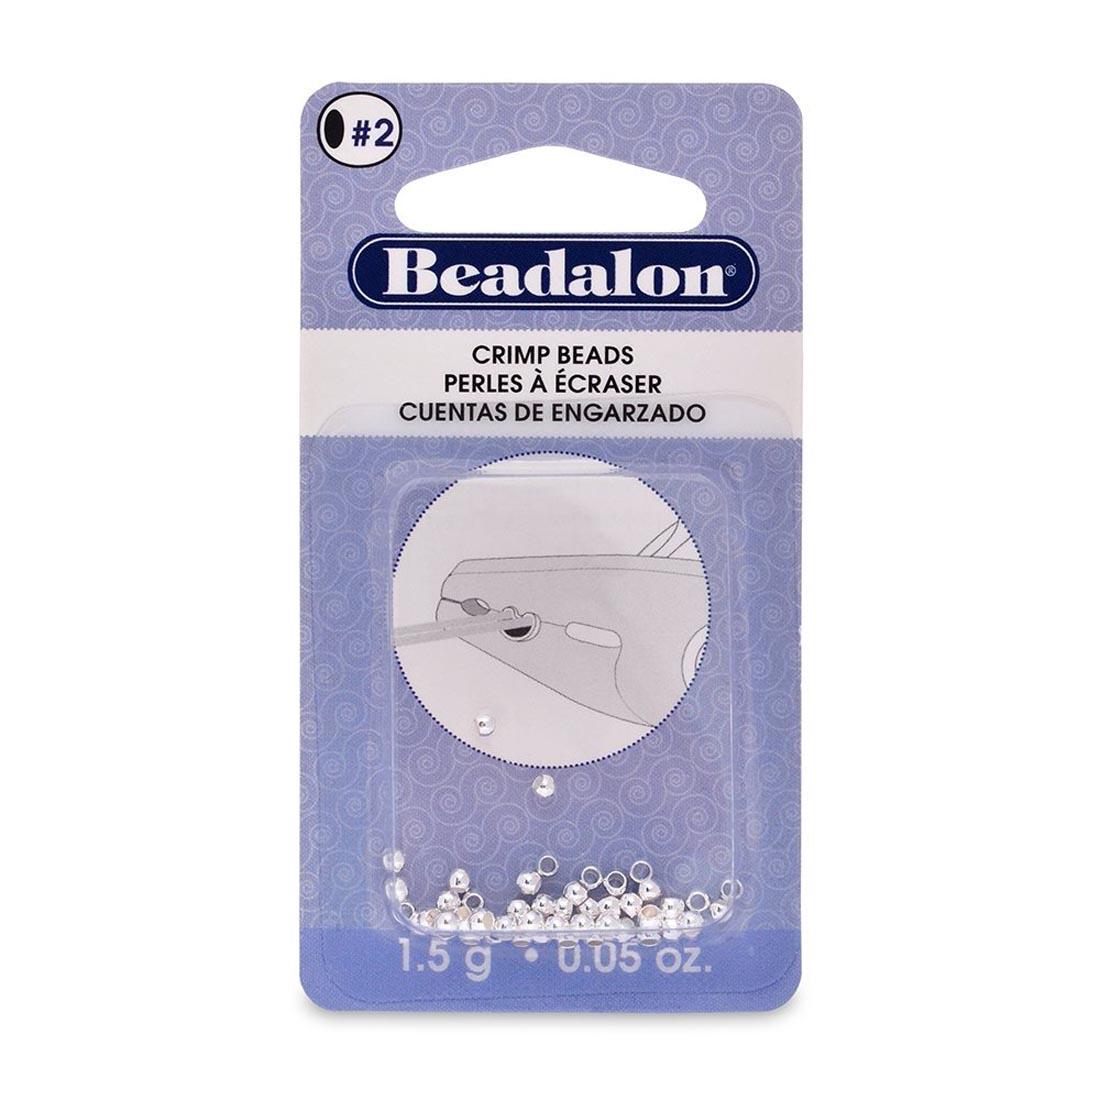 Beadalon Crimp Beads Size 2